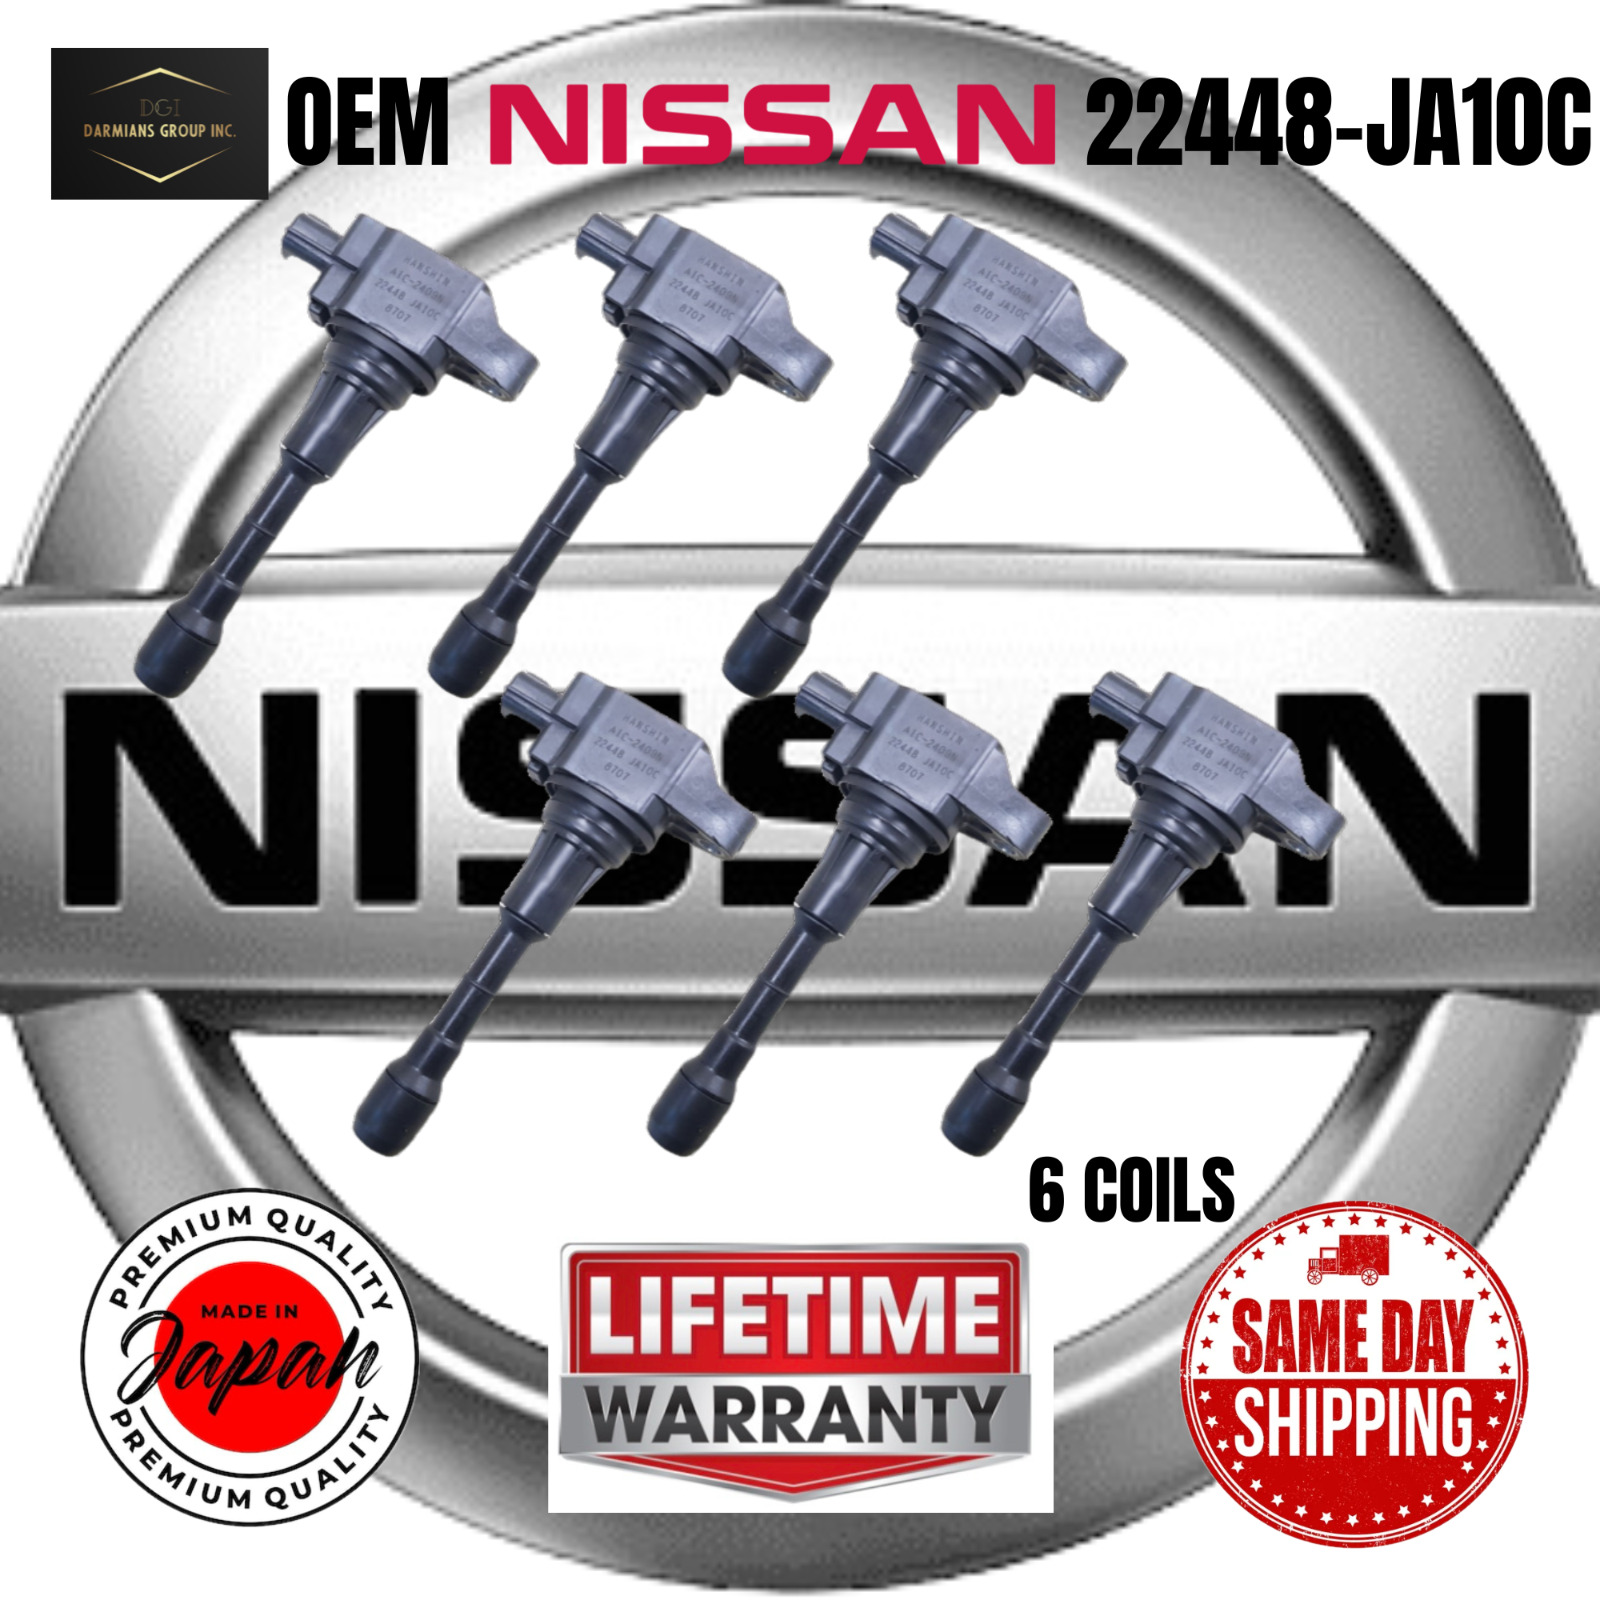 OEM NISSAN x6 Ignition Coils For 2007-2017 Nissan & Infiniti V6, 22448-JA10C